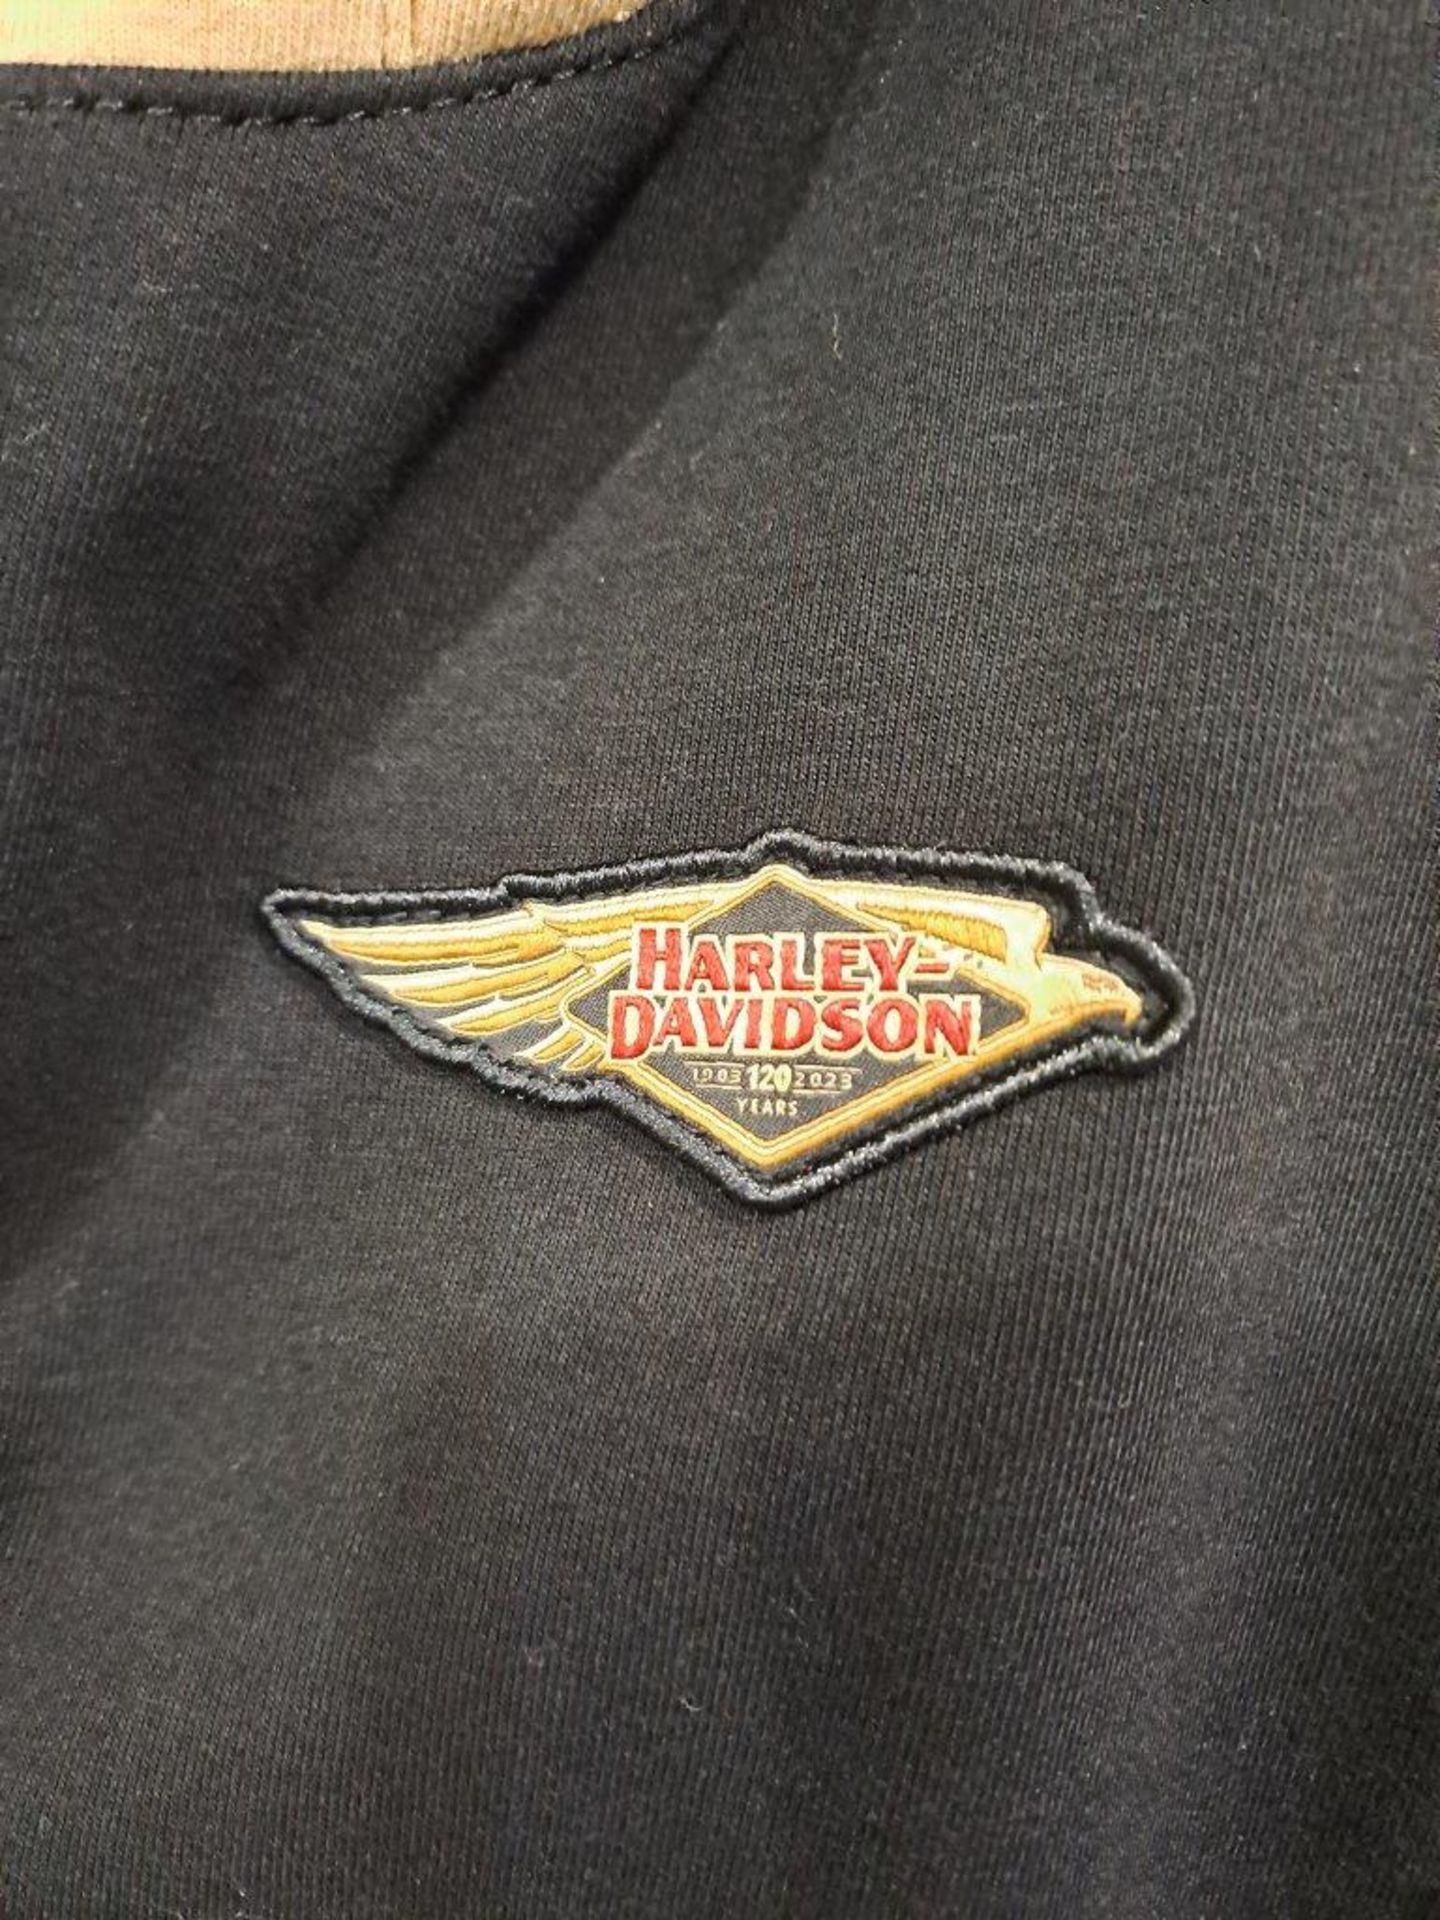 Harley Davidson 120th Anniversary Medium Womens Jacket - Image 4 of 9